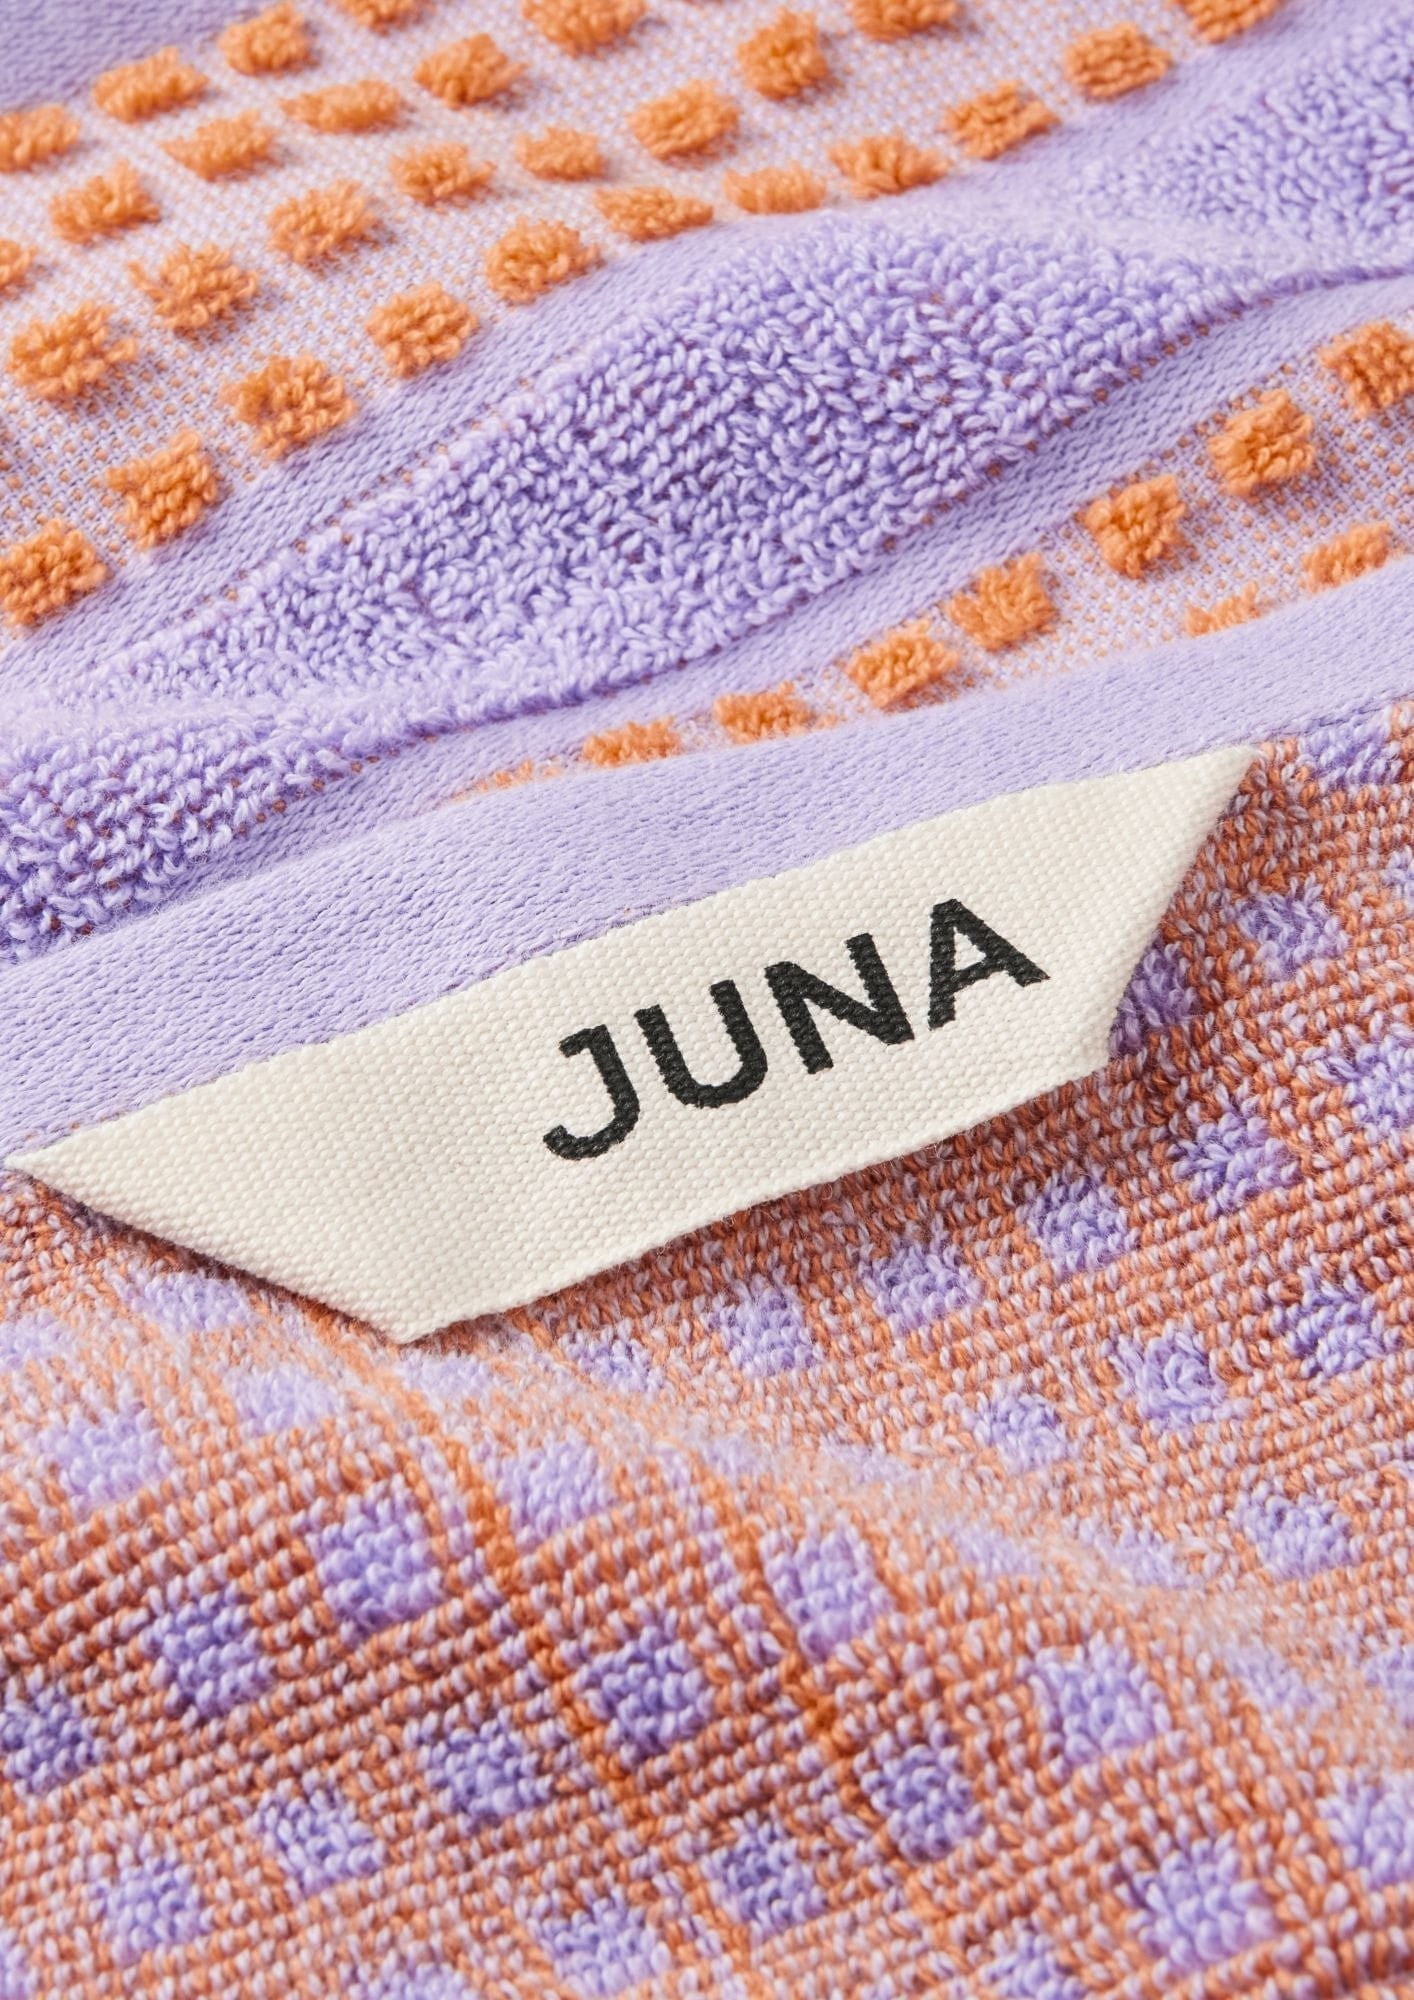 JUNA CHECK WOWLOTH 30x30 cm, púrpura